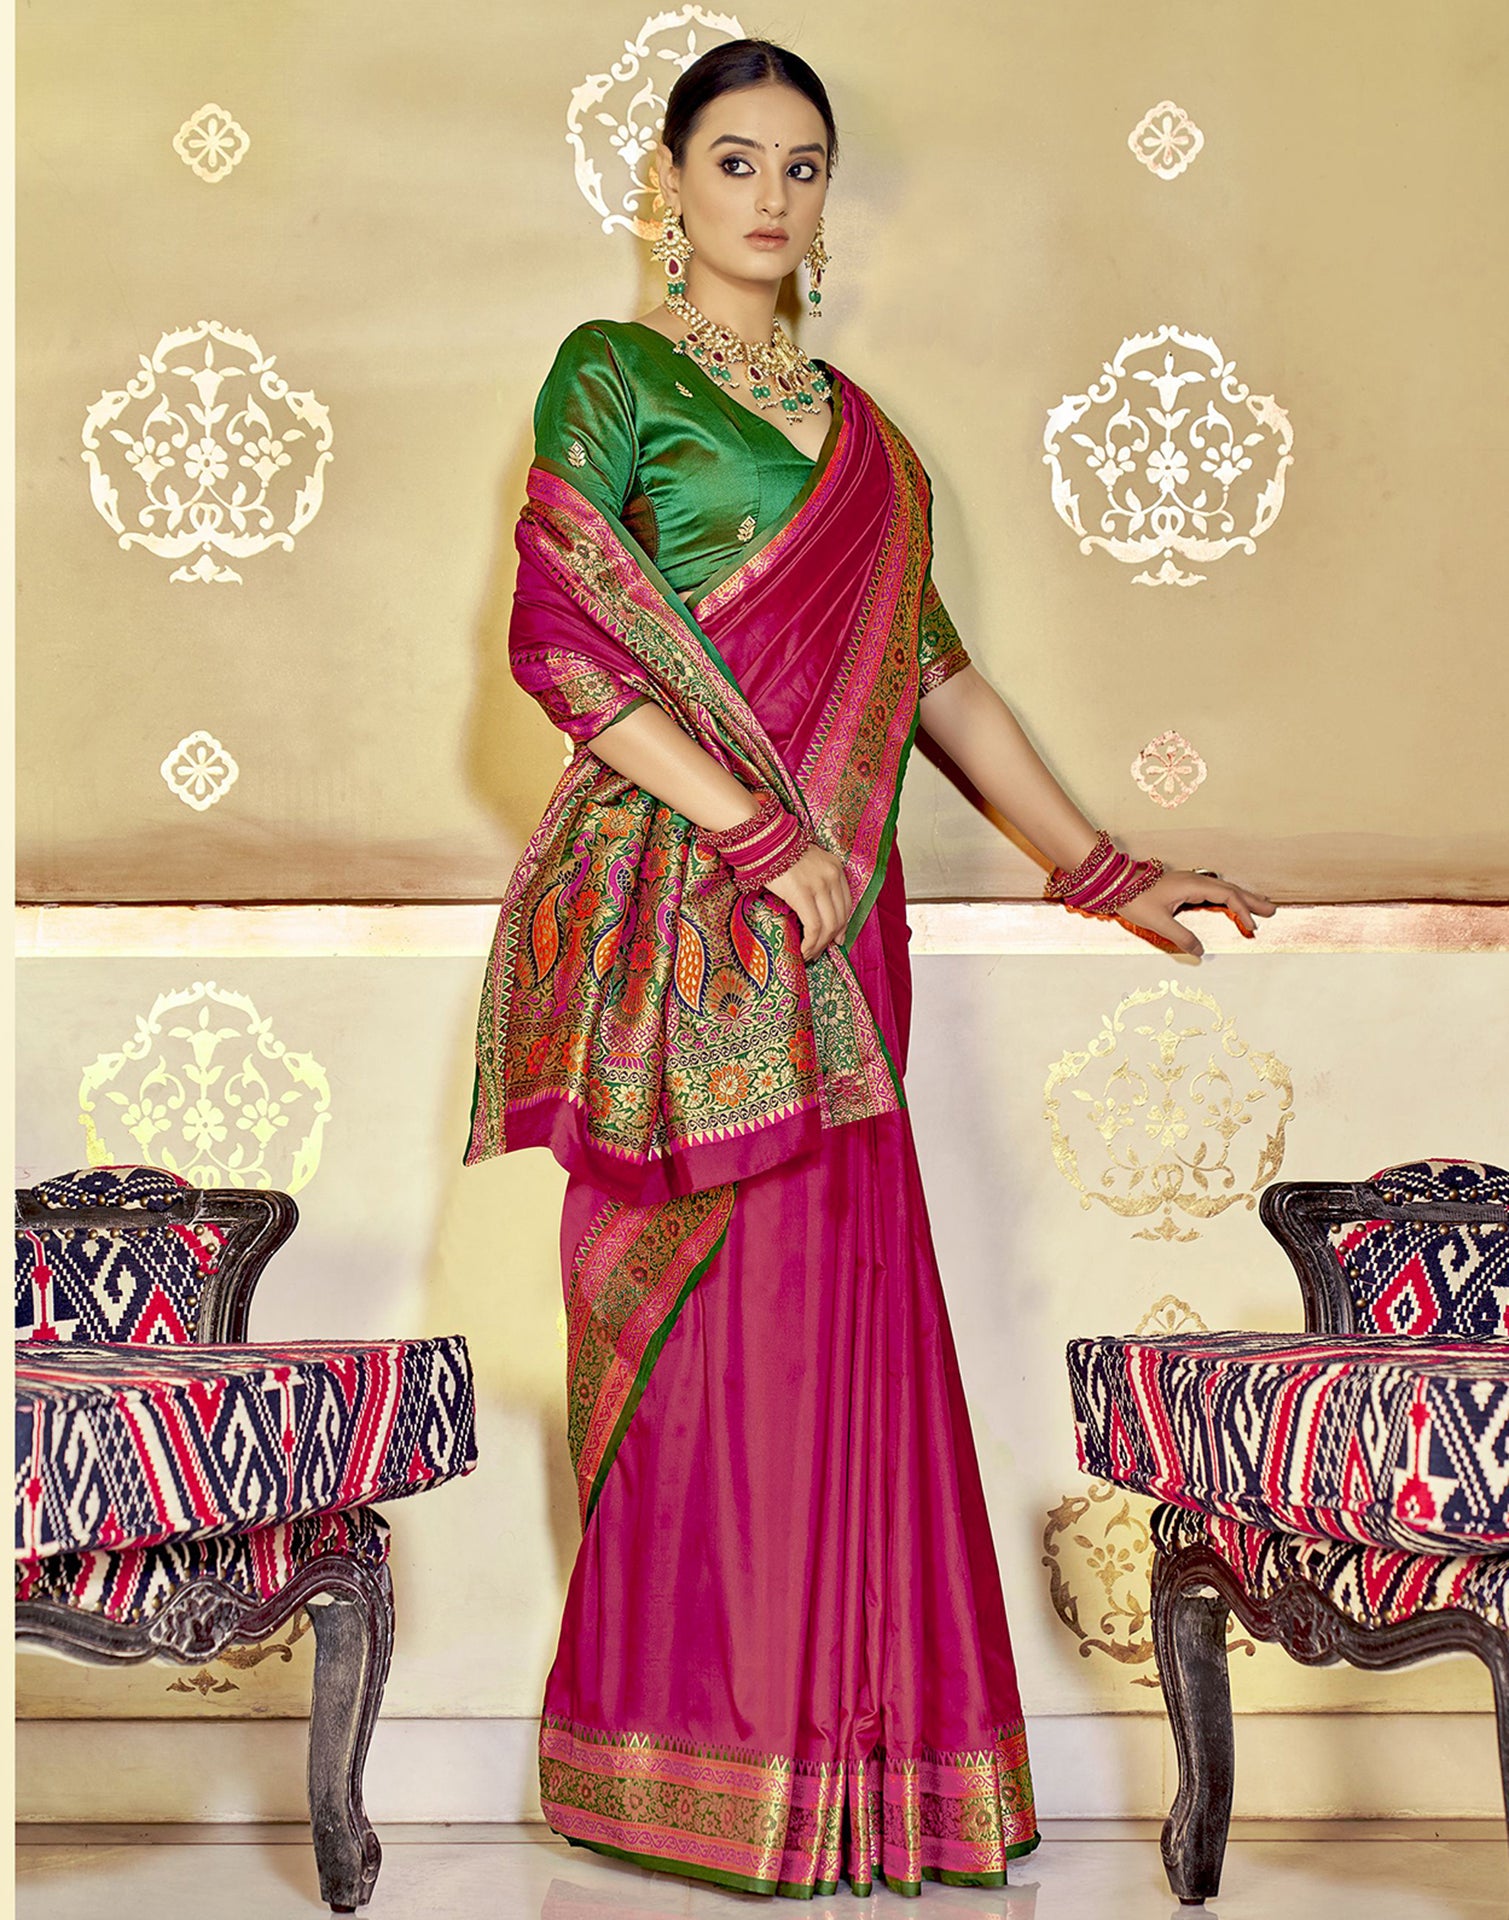 Shraddha Kapoor, Katrina Kaif and Mira Kapoor like to Keep it desi and hot  in silk saree and sleeveless blouse | IWMBuzz